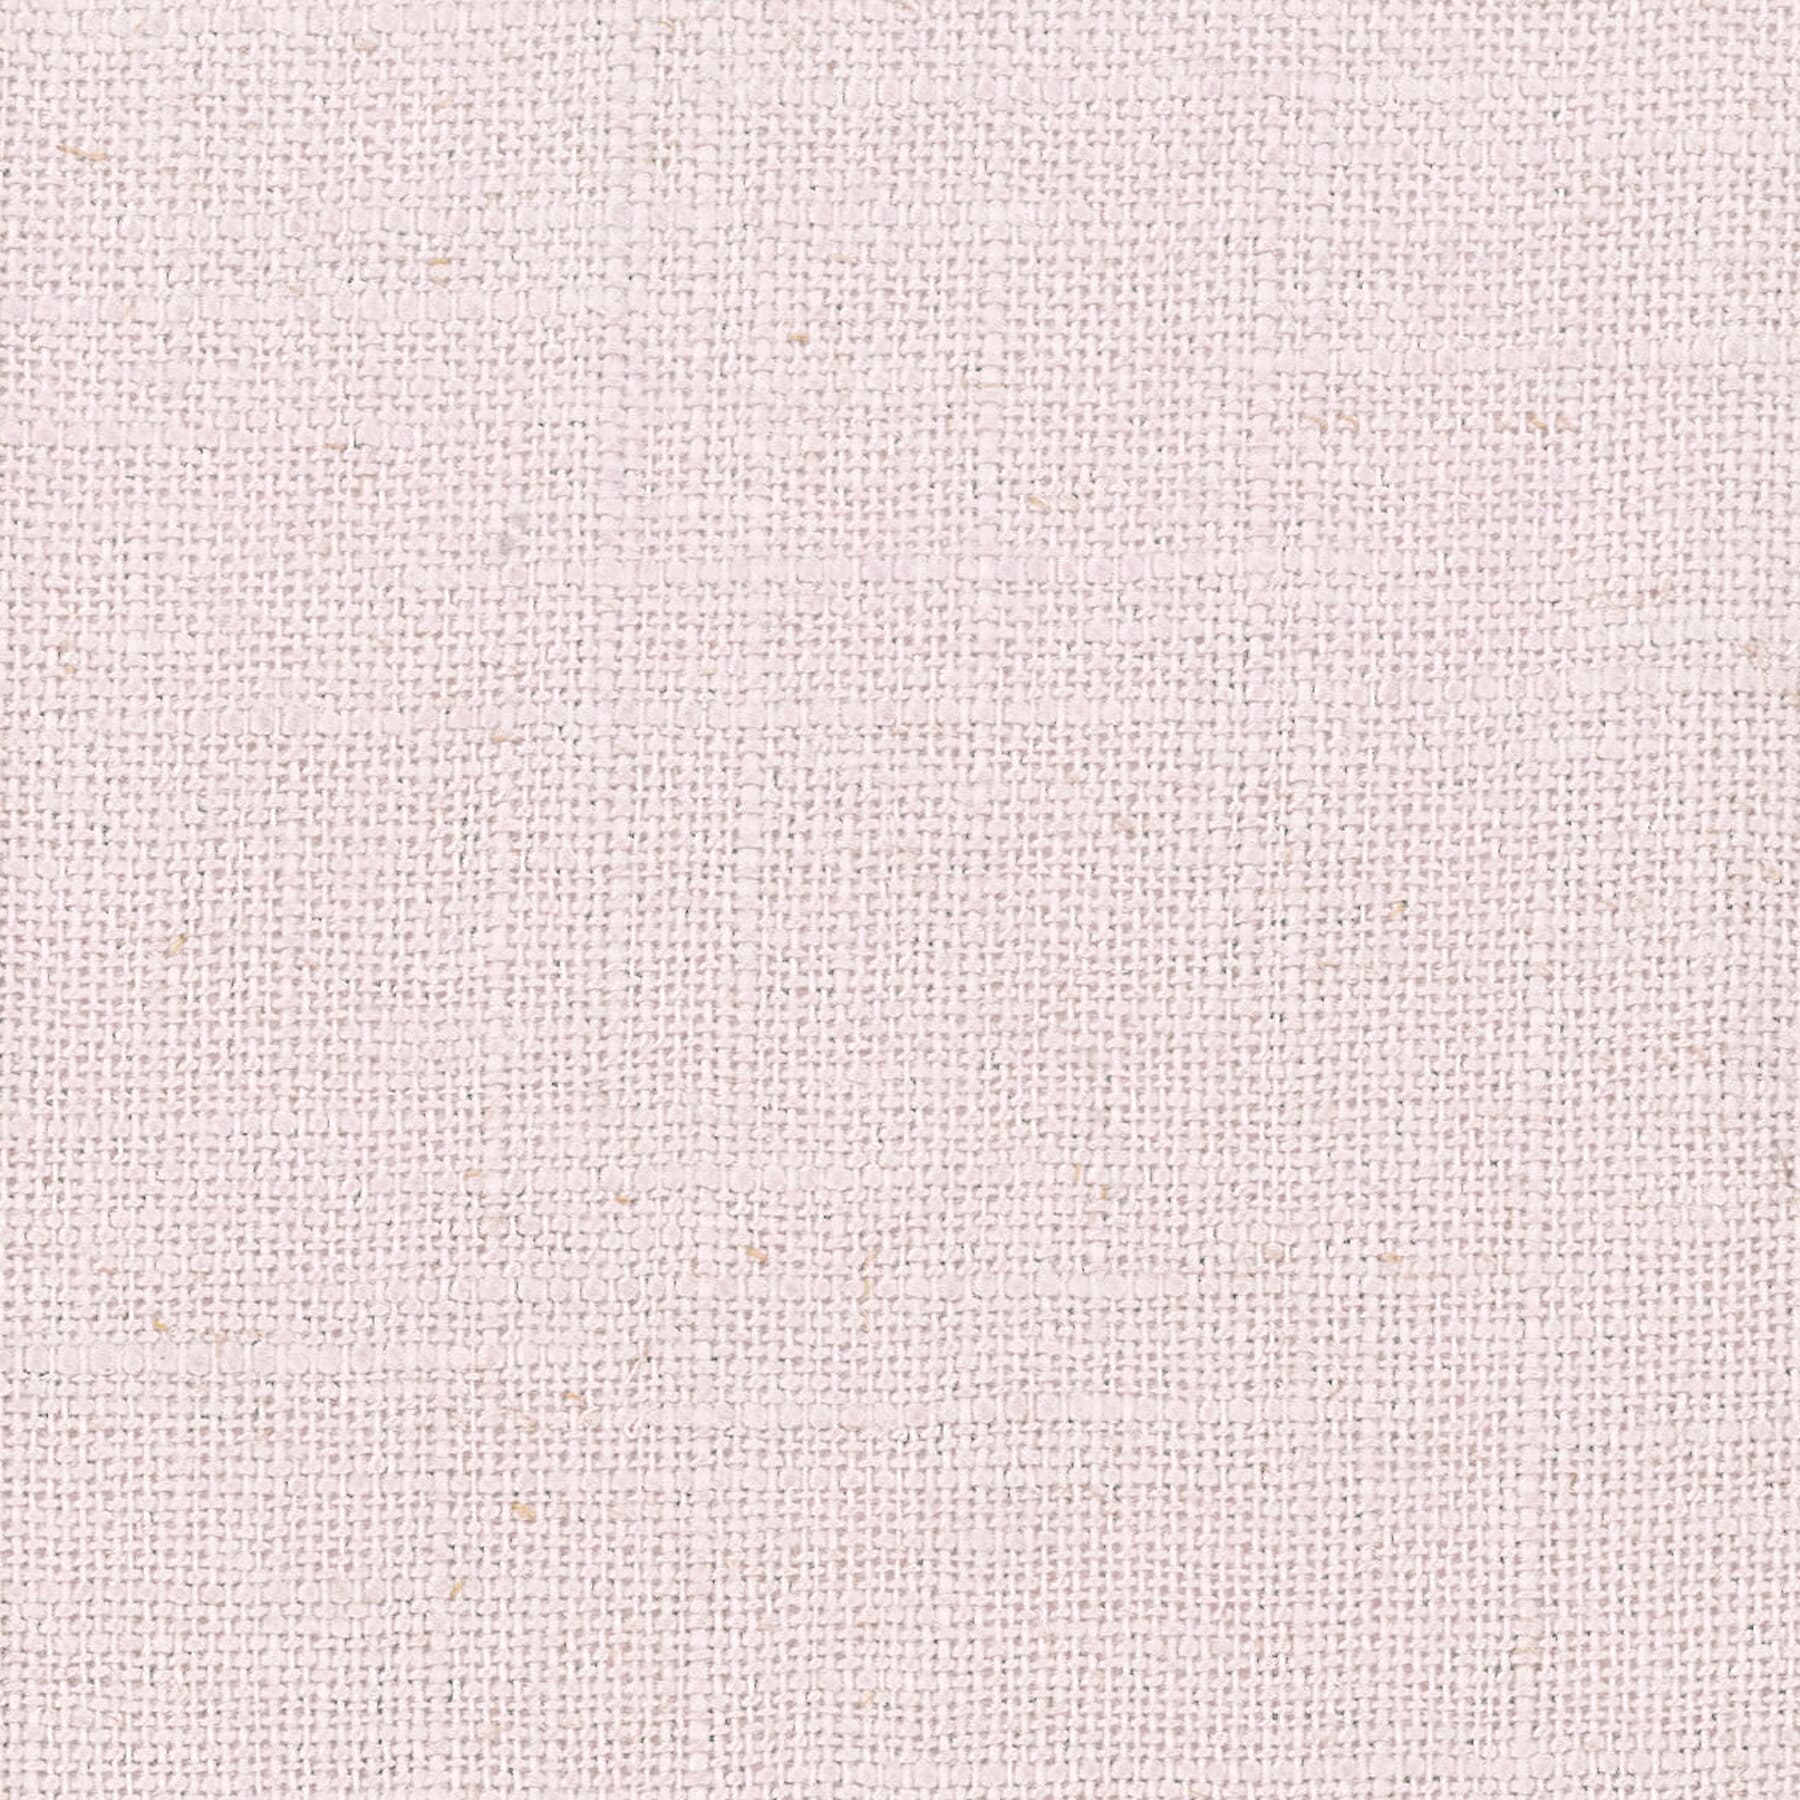 Ticonderoga 42 Lavender by Stout Fabric